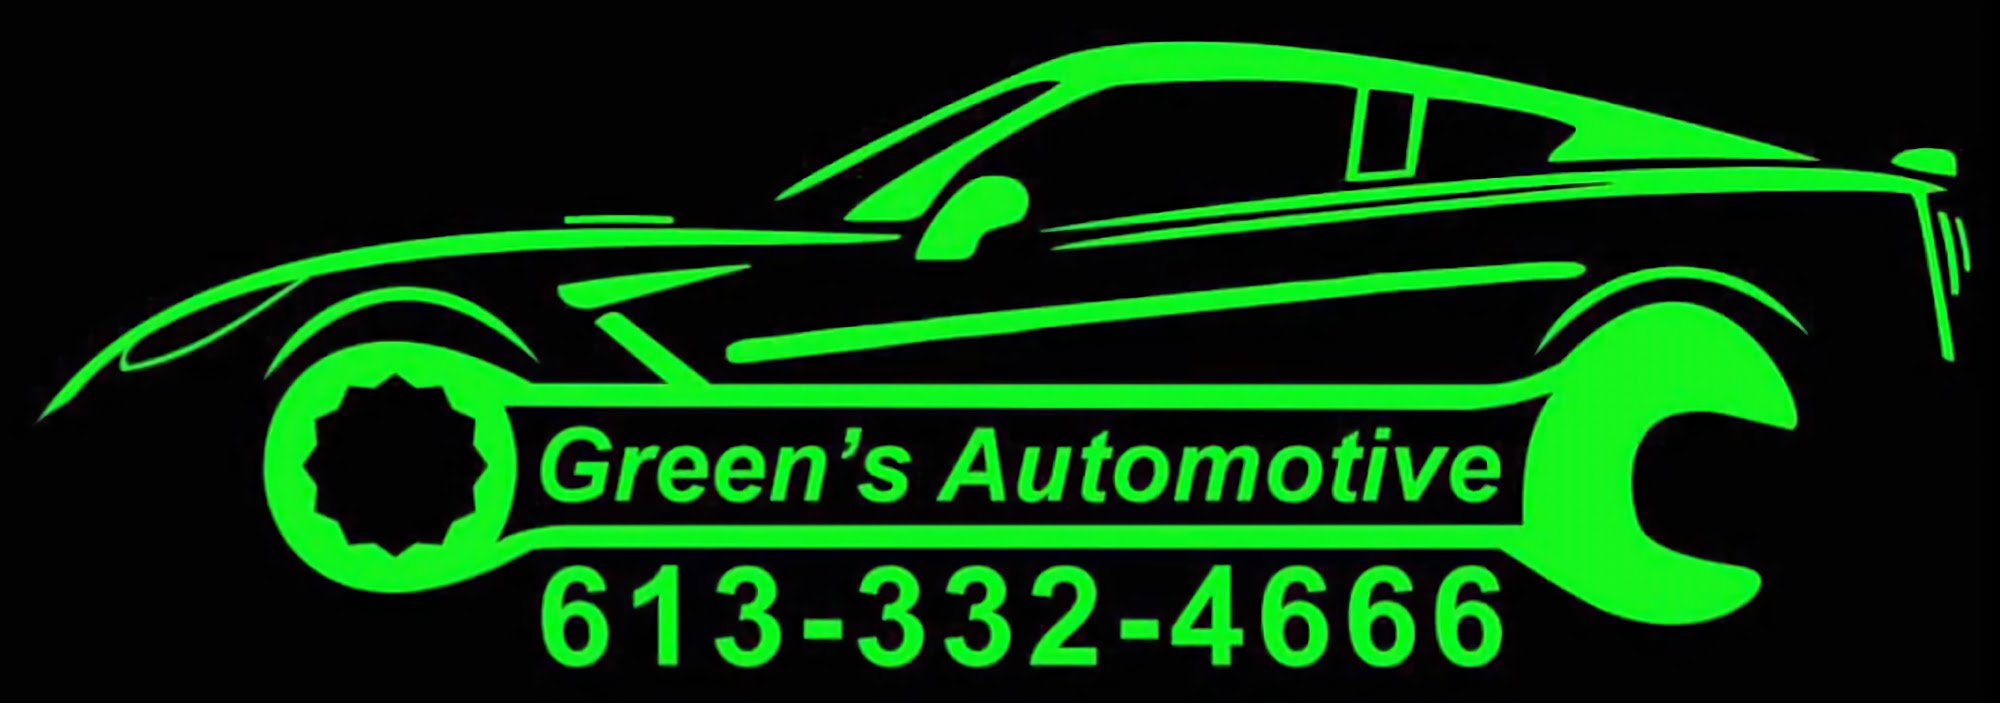 Green's Automotive